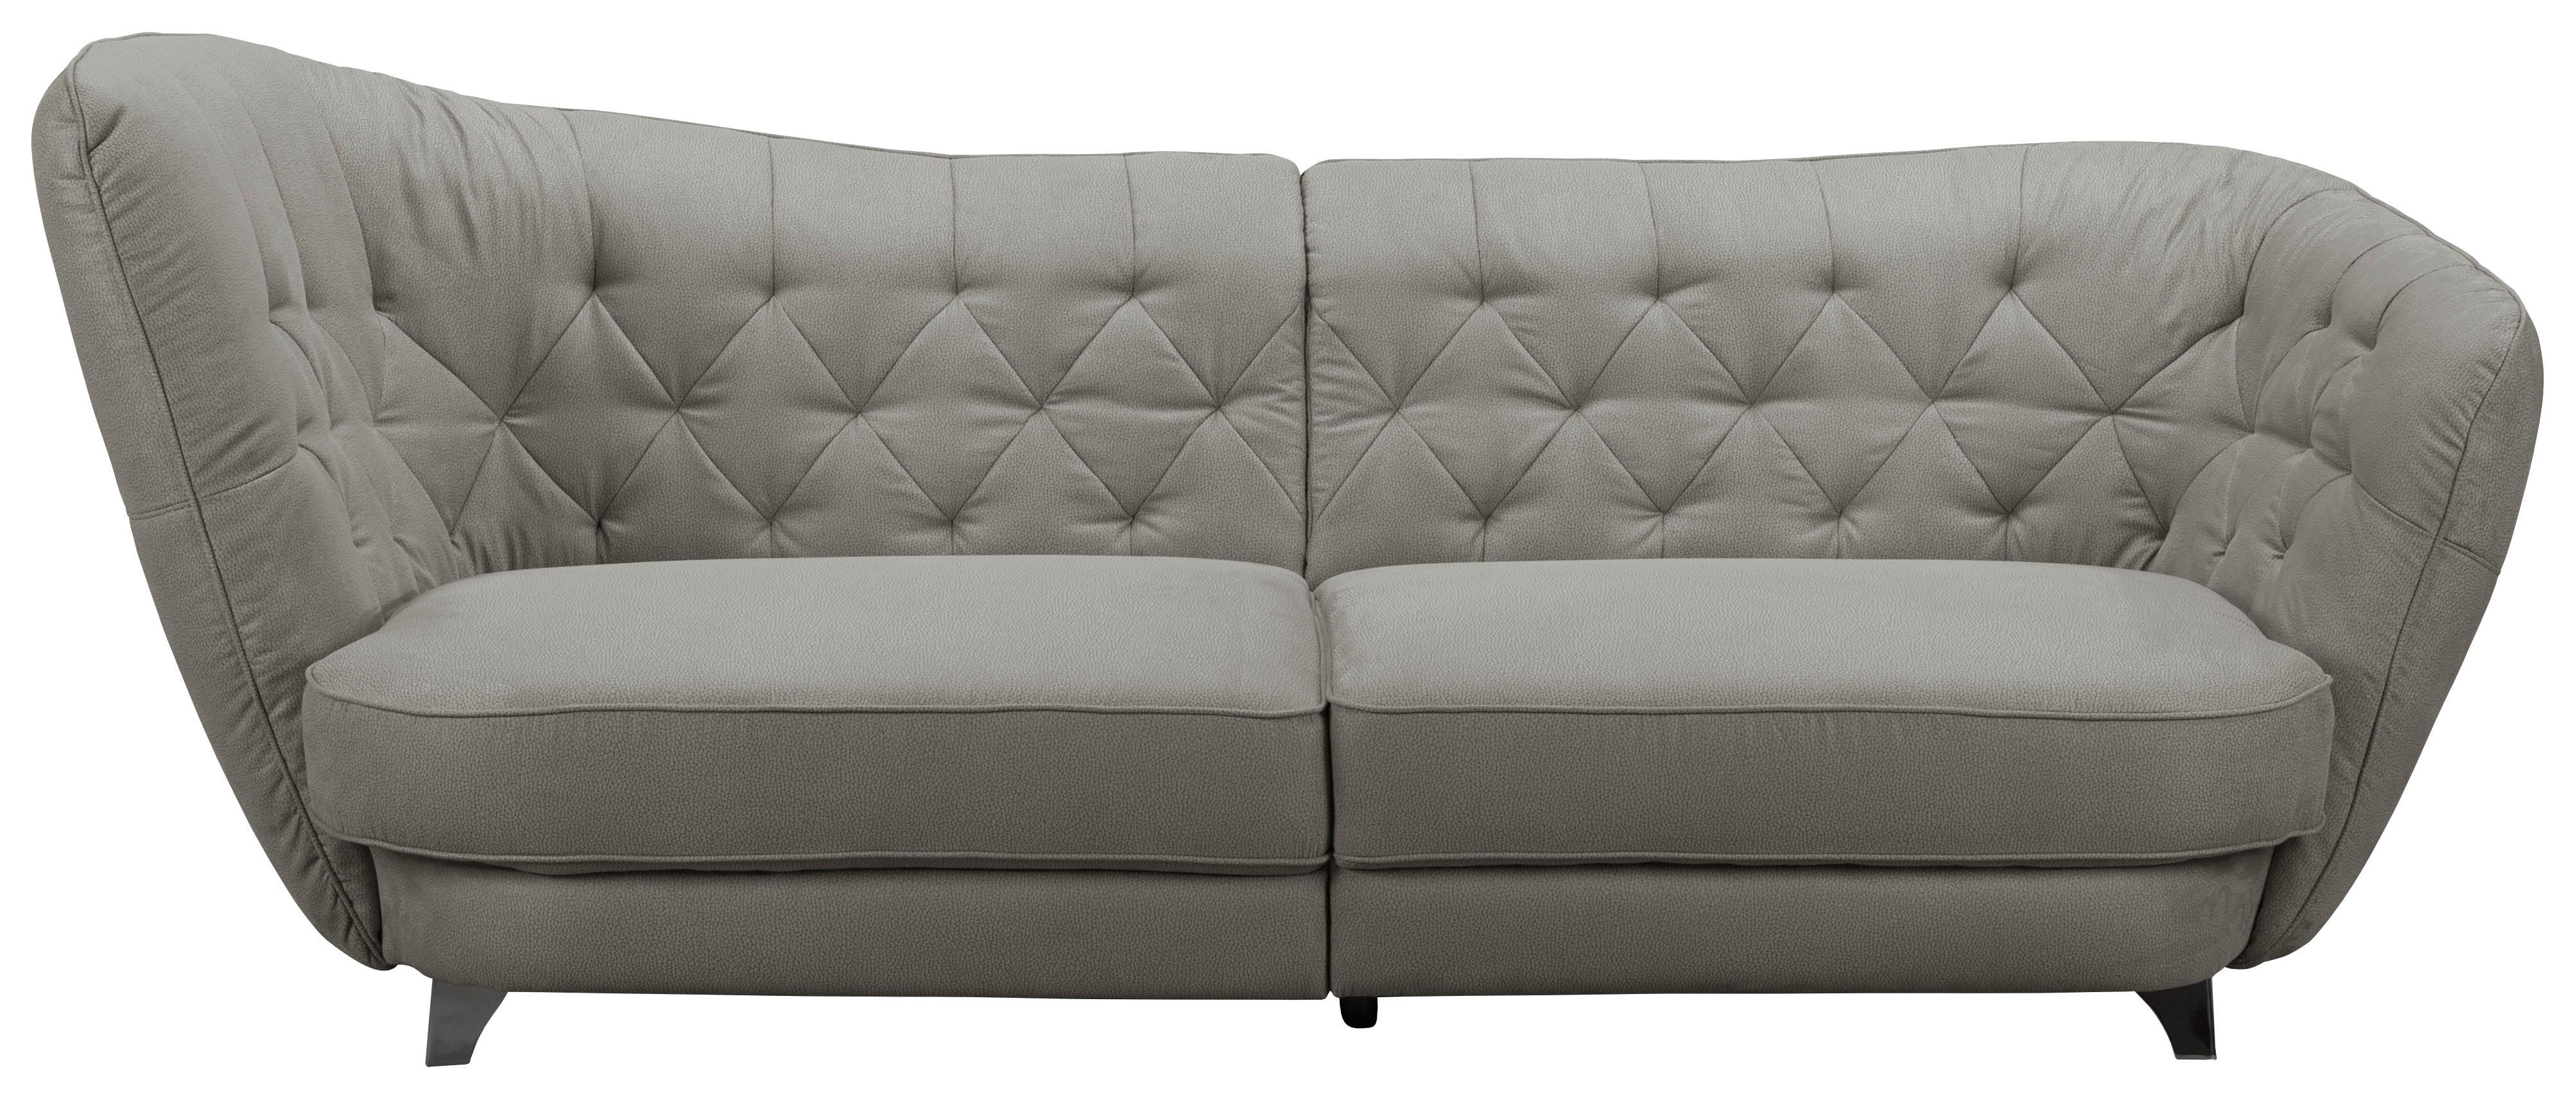 Big Sofa mit Echtem Rücken Retro B: 256 cm Braun - Chromfarben/Braun, MODERN, Textil (256/85/115cm) - MID.YOU